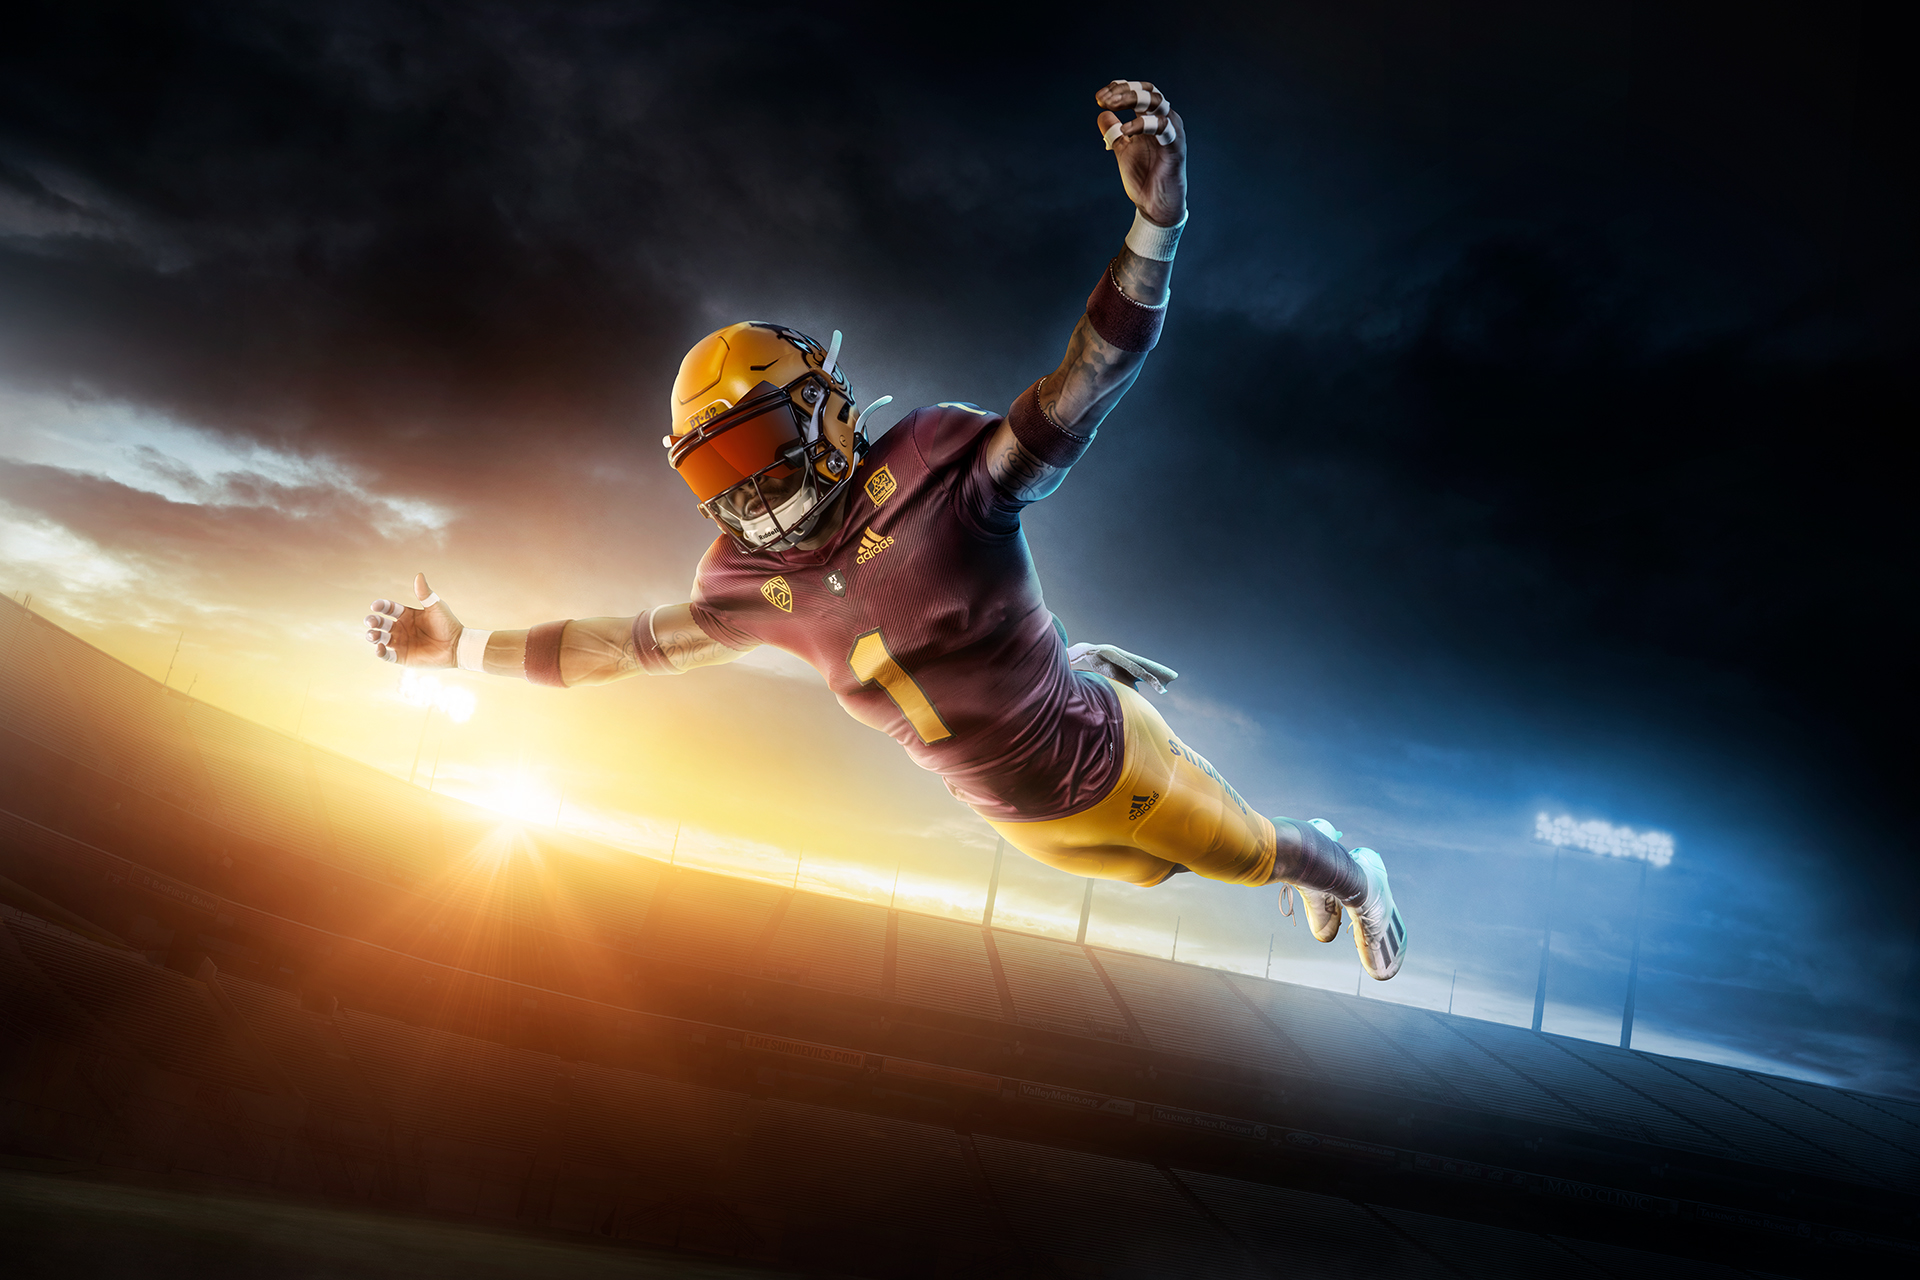 Football player flying on photoshoot